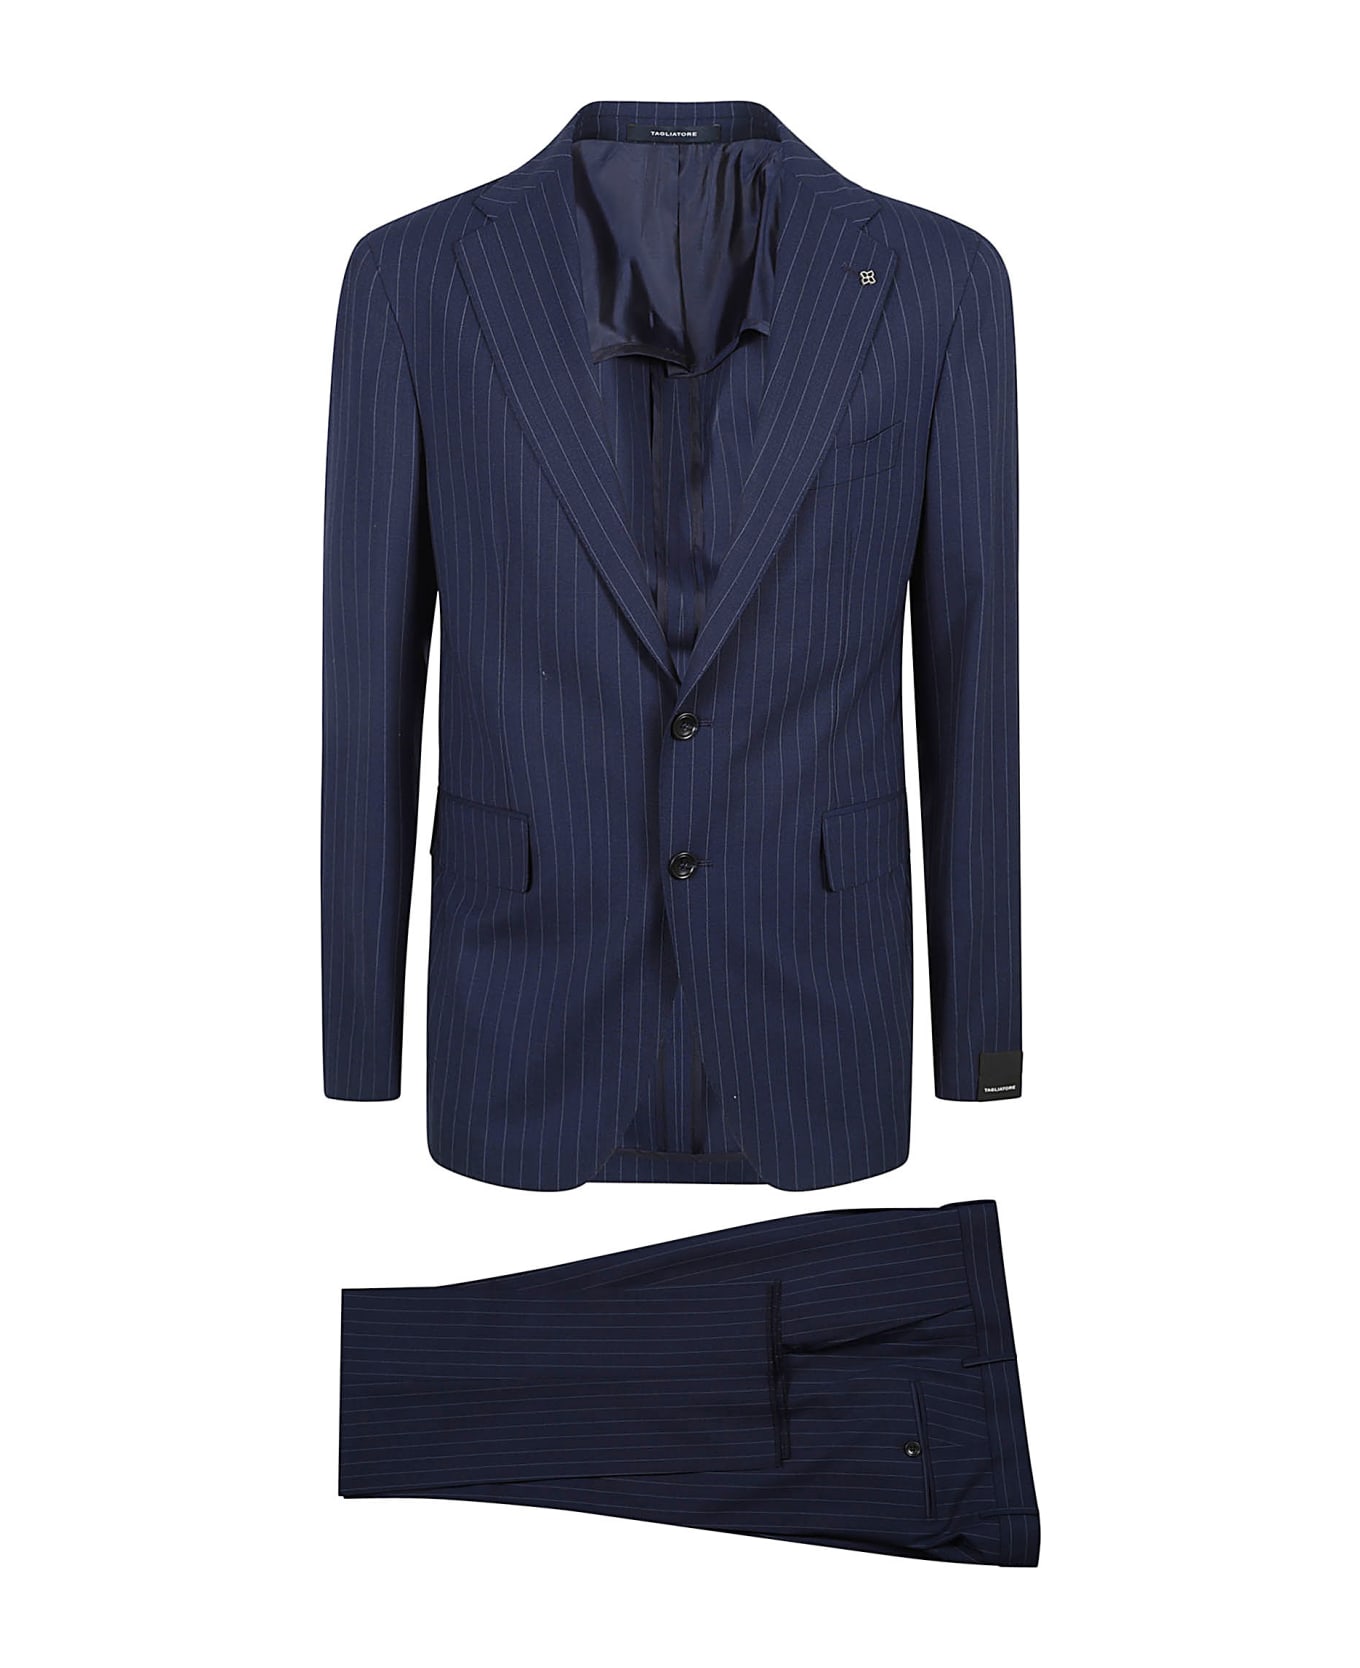 Tagliatore Pinstripe Suit - Navy スーツ